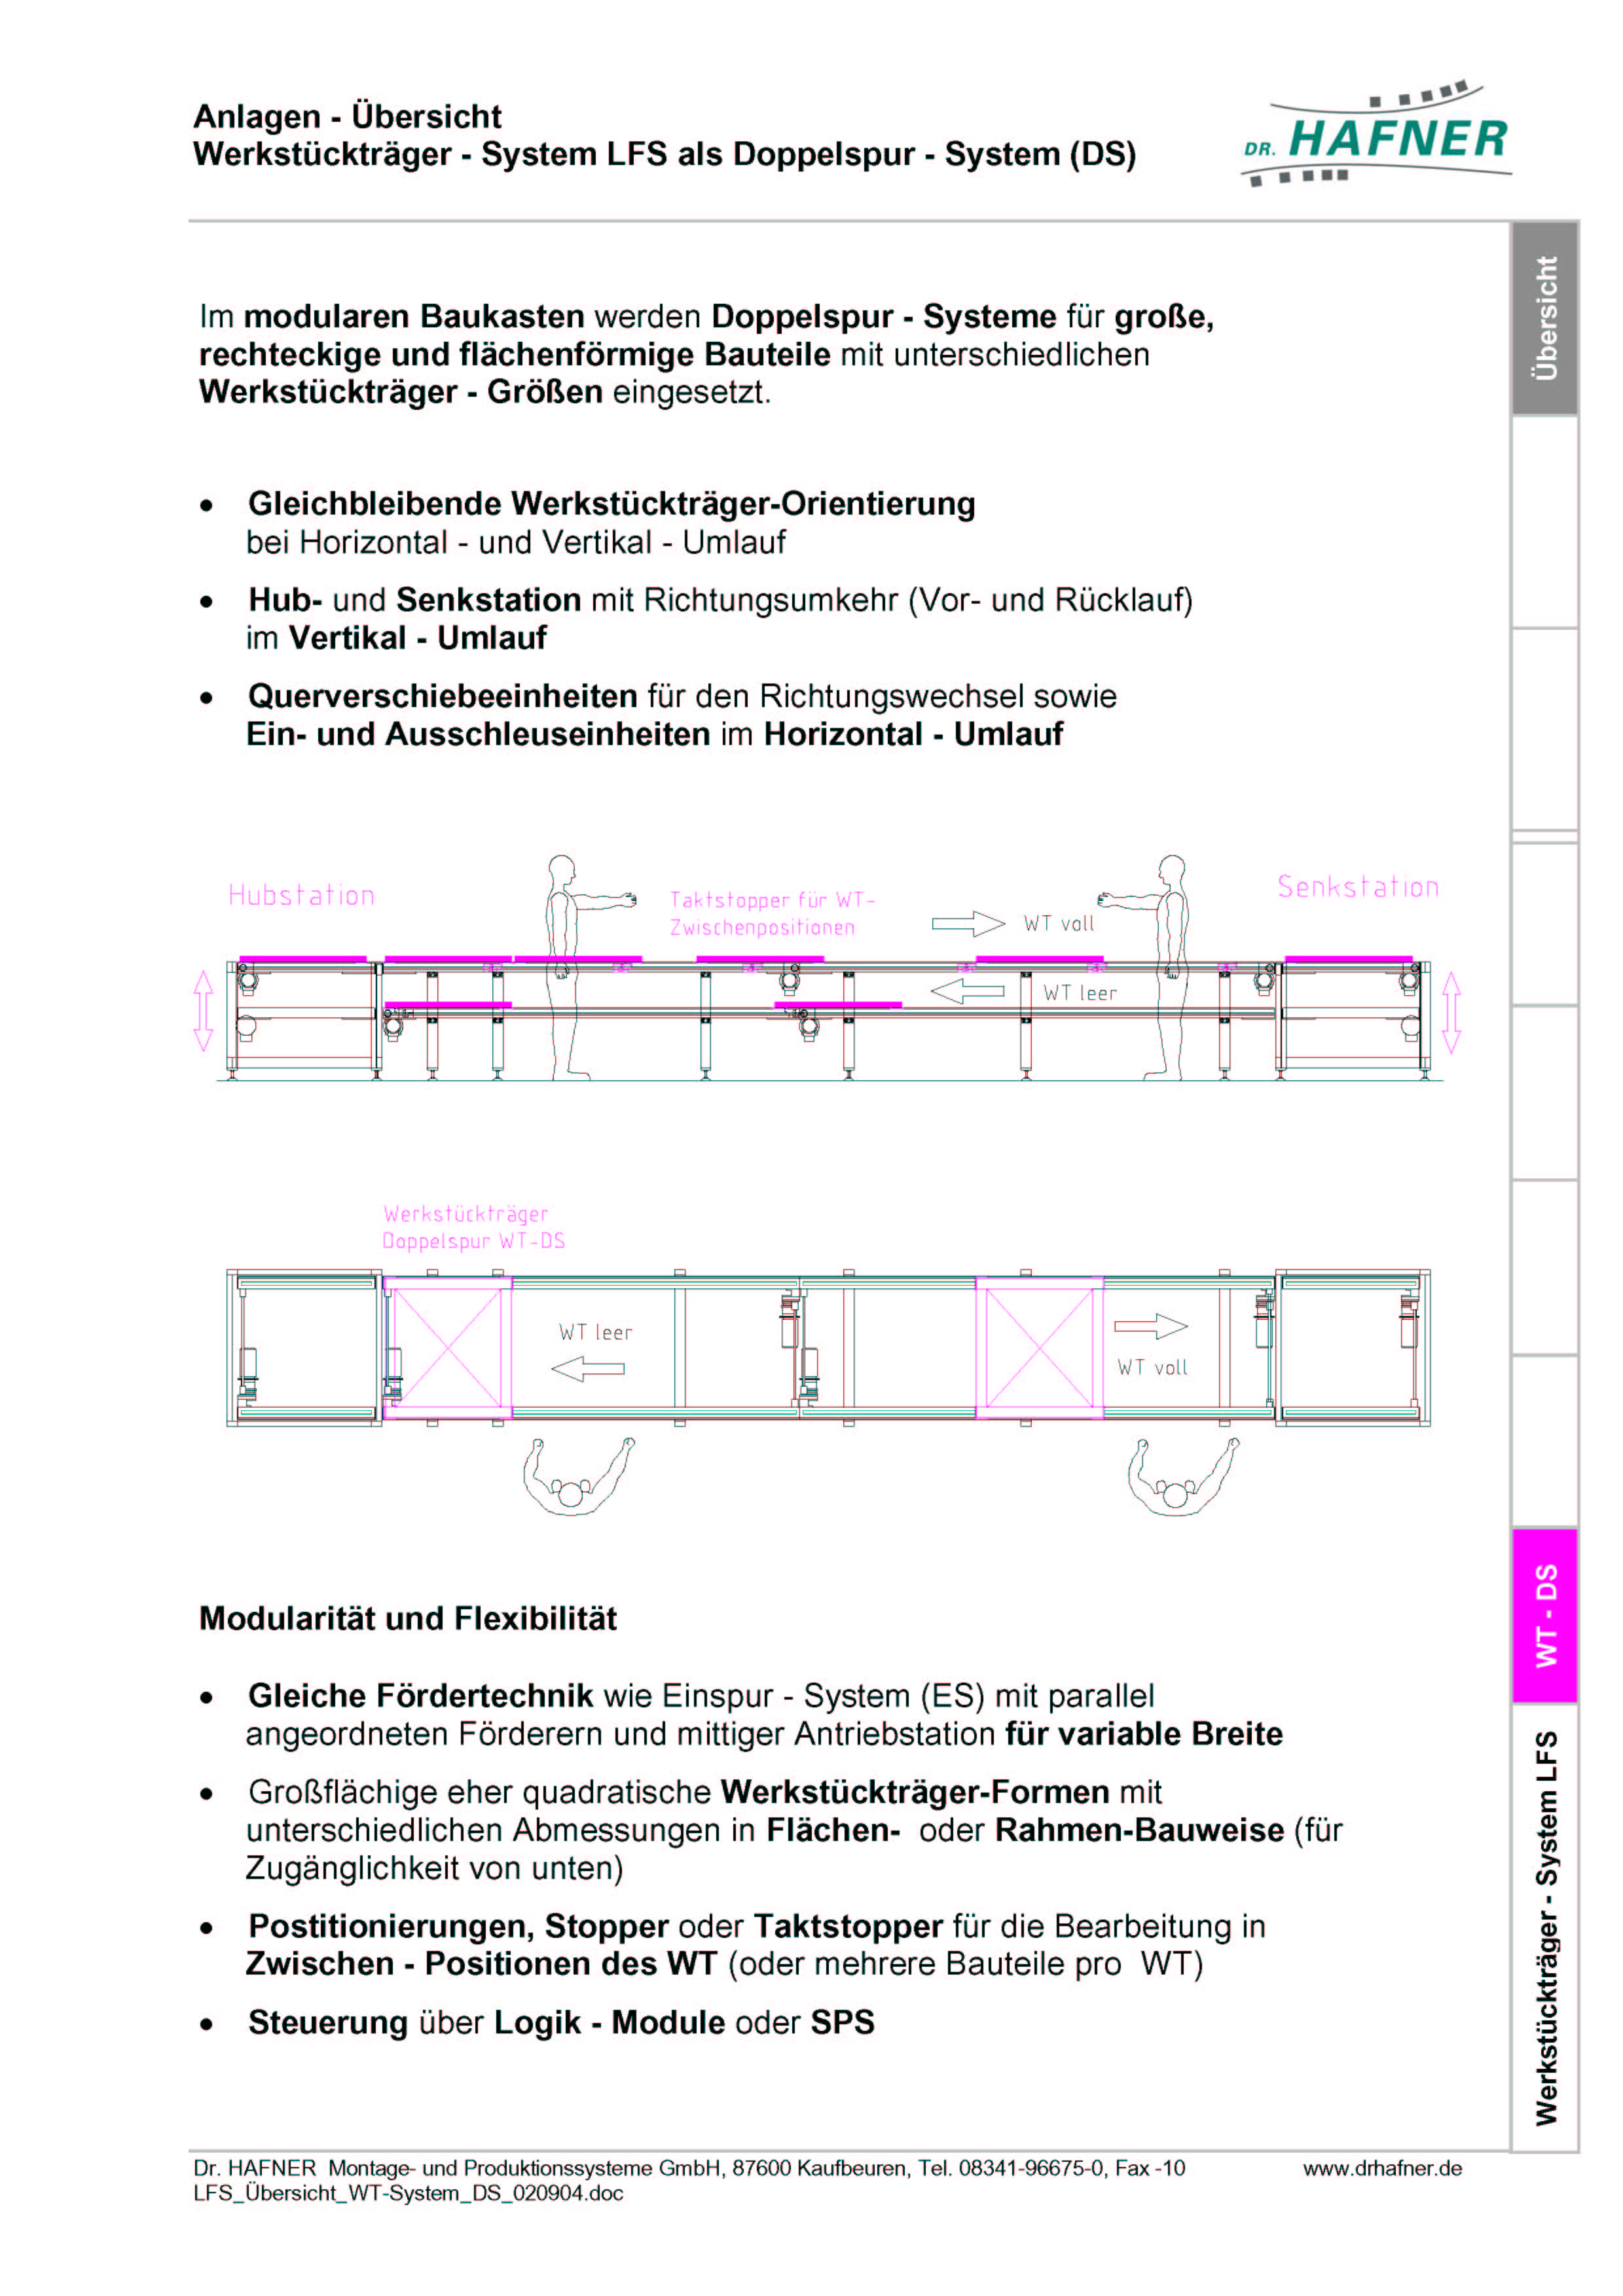 Dr. HAFNER_PKWP_21 Werkstückträger-System LFS Doppelspur